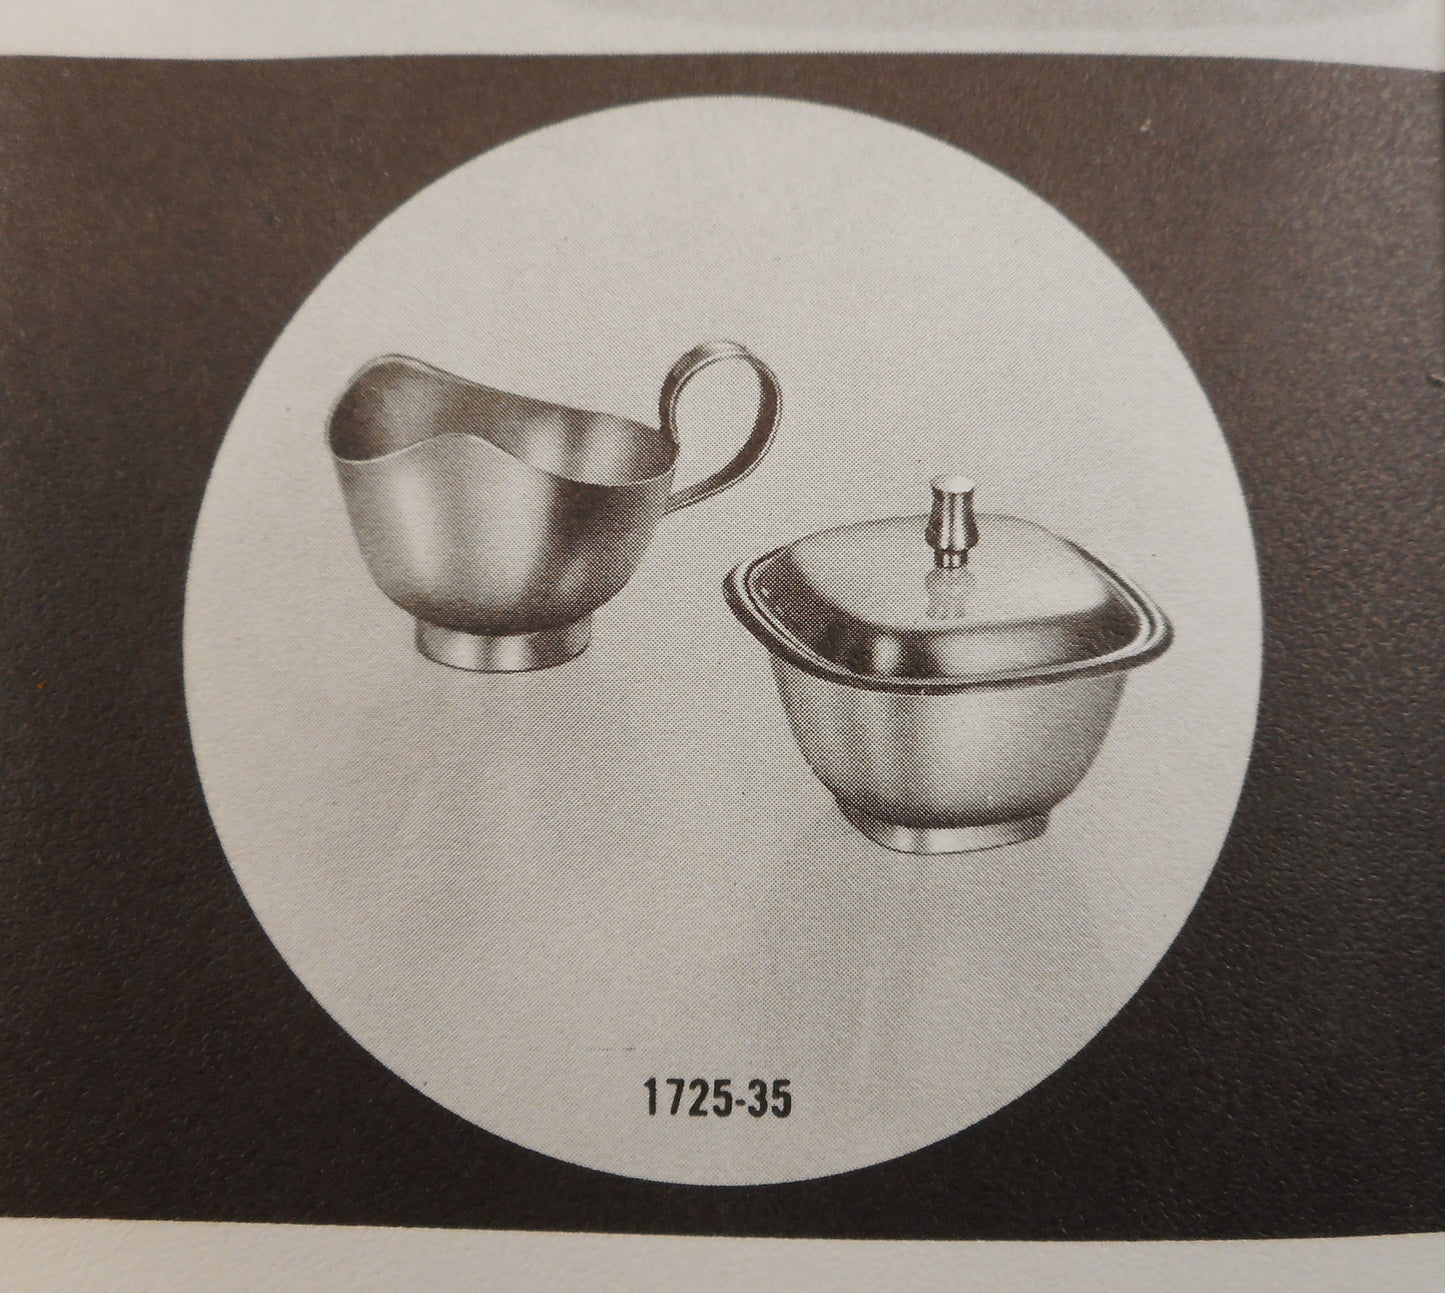 WMF Cultura 1960s Stainless Steel Creamer & Sugar Set 1725-35 Advertisement